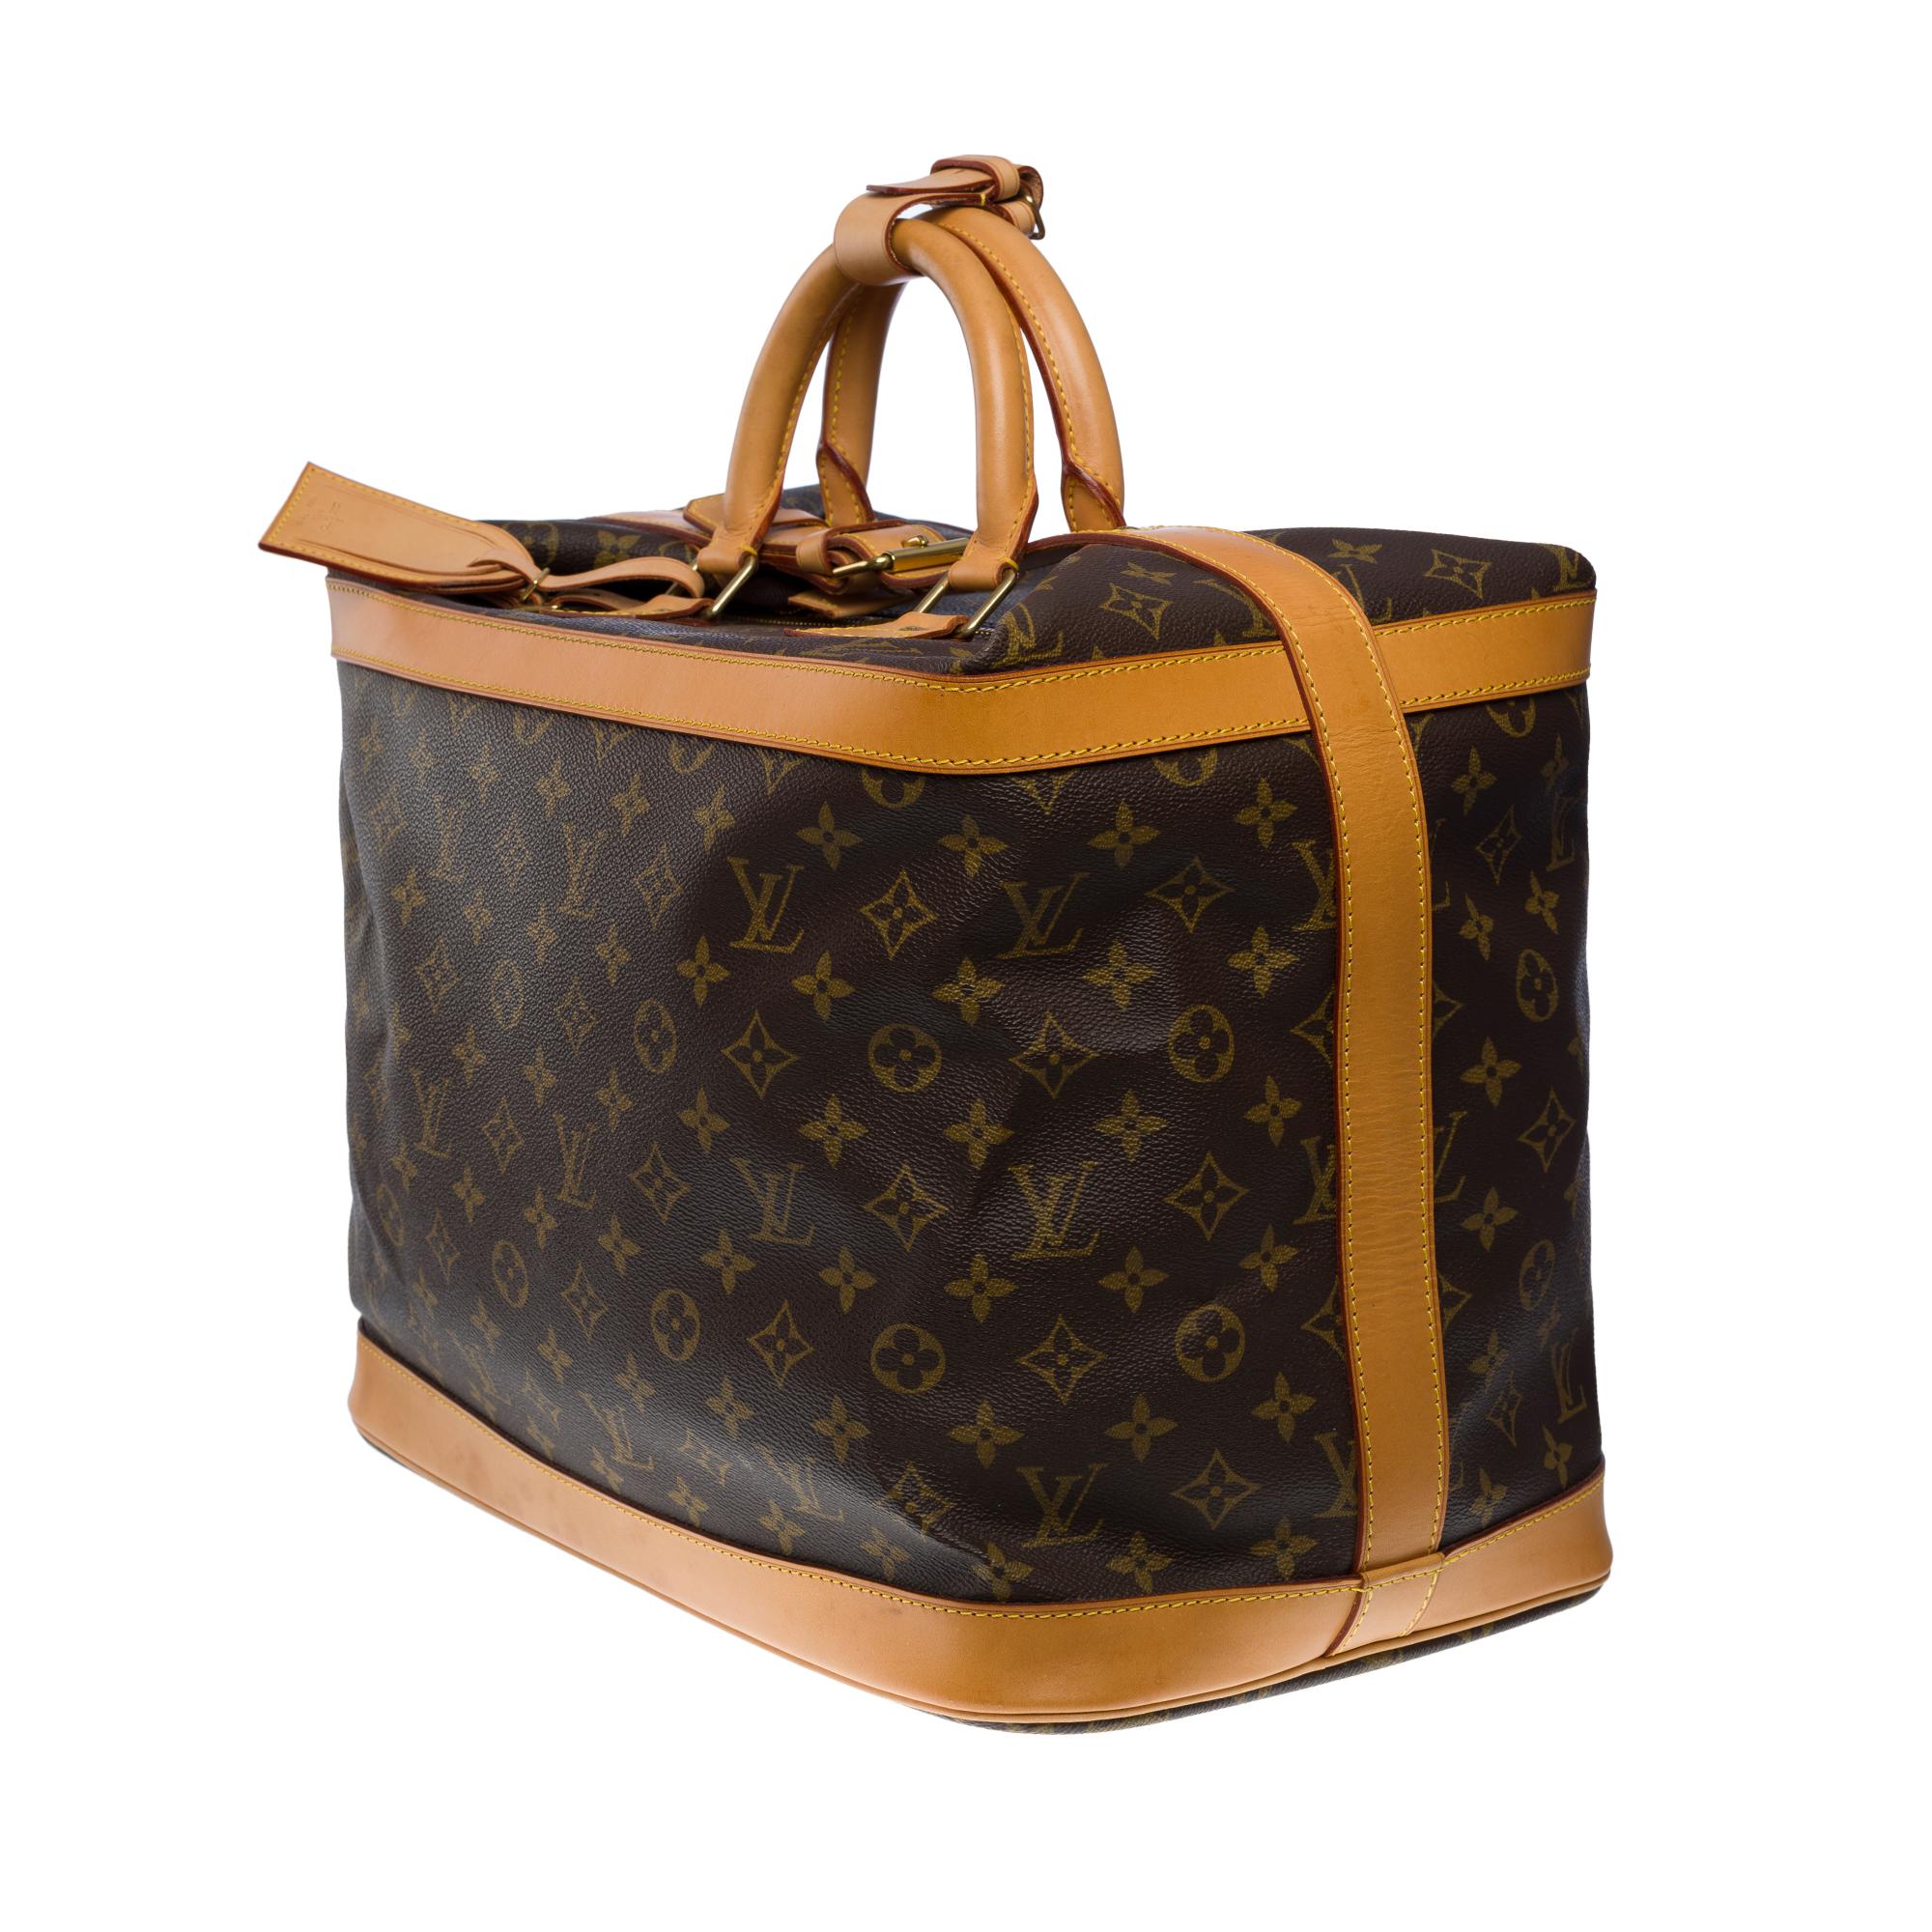 Women's or Men's Rare Louis Vuitton Cruiser Travel bag in brown Monogram canvas, gold hardware